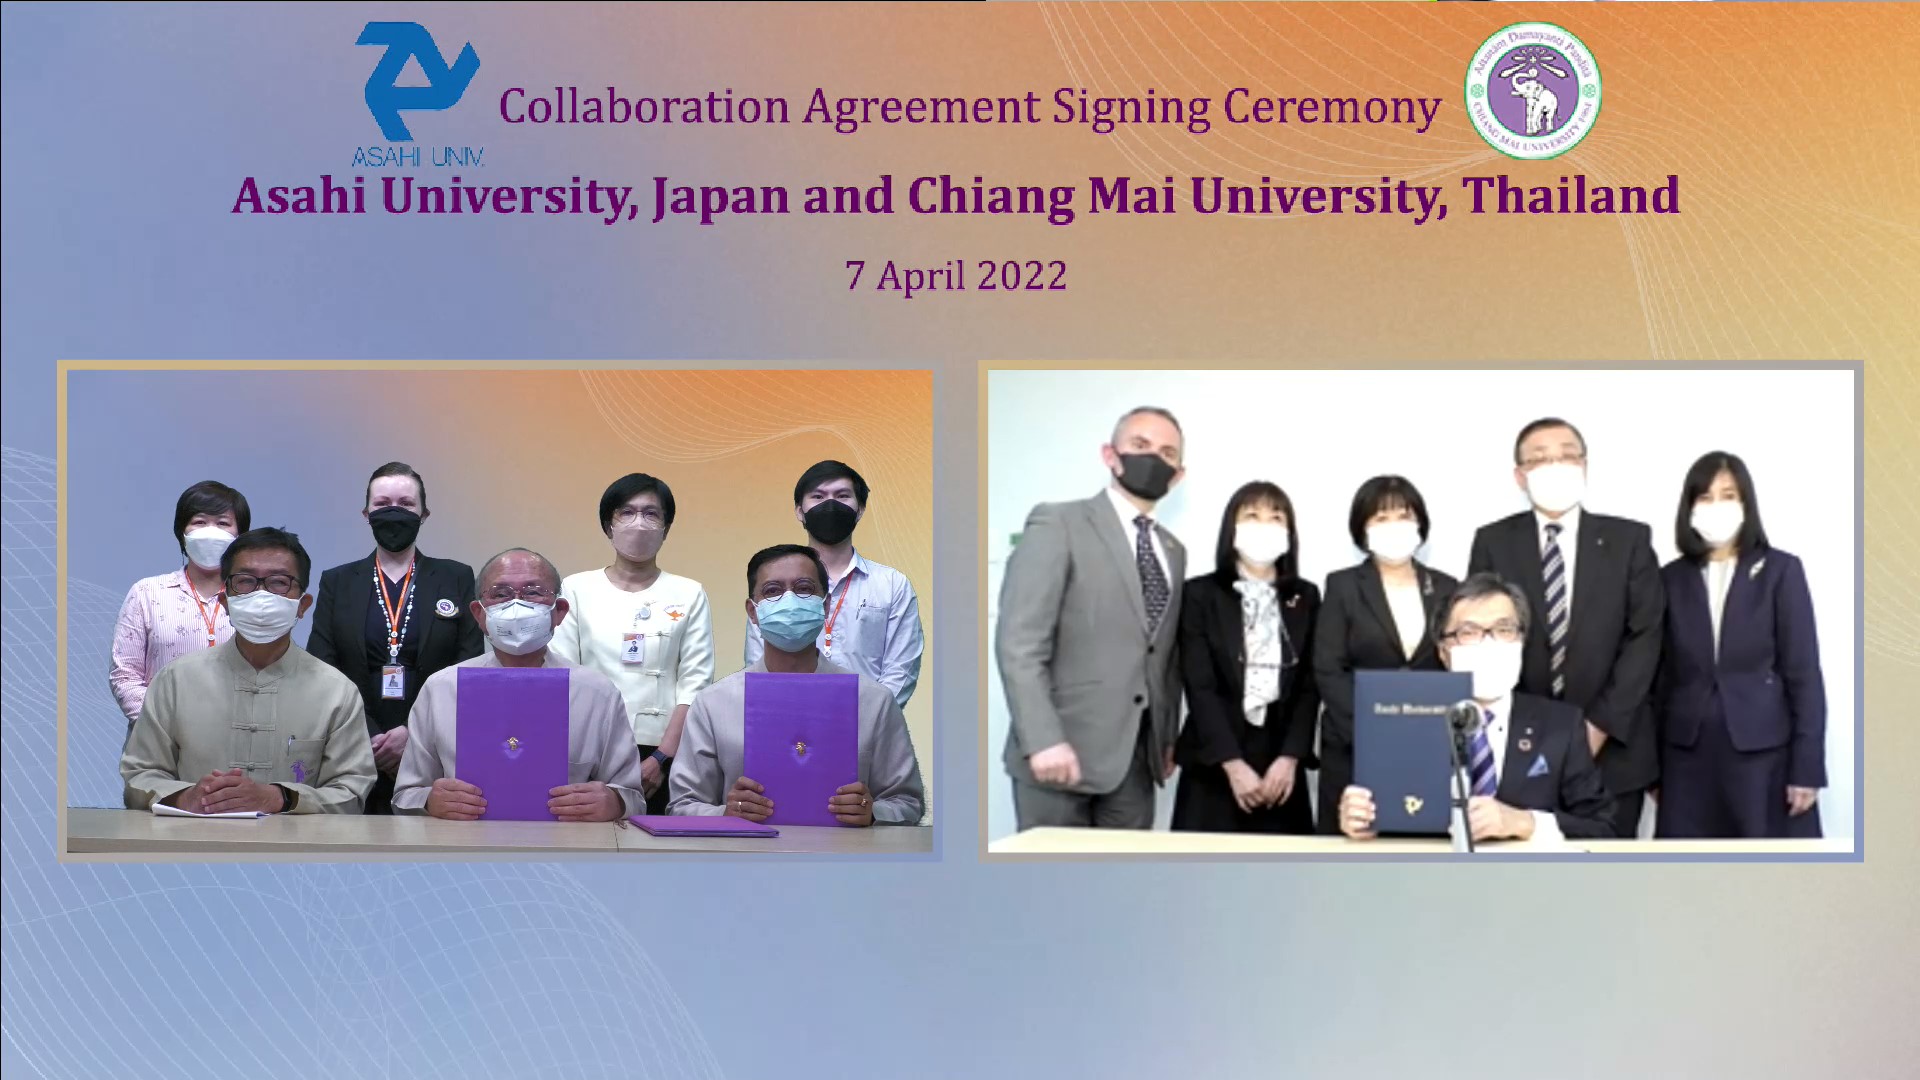 <div>
	พิธีลงนามความร่วมมือทางวิชาการกับ Asahi University Department of Nursing, School of Health Sciences ญี่ปุ่น</div>
